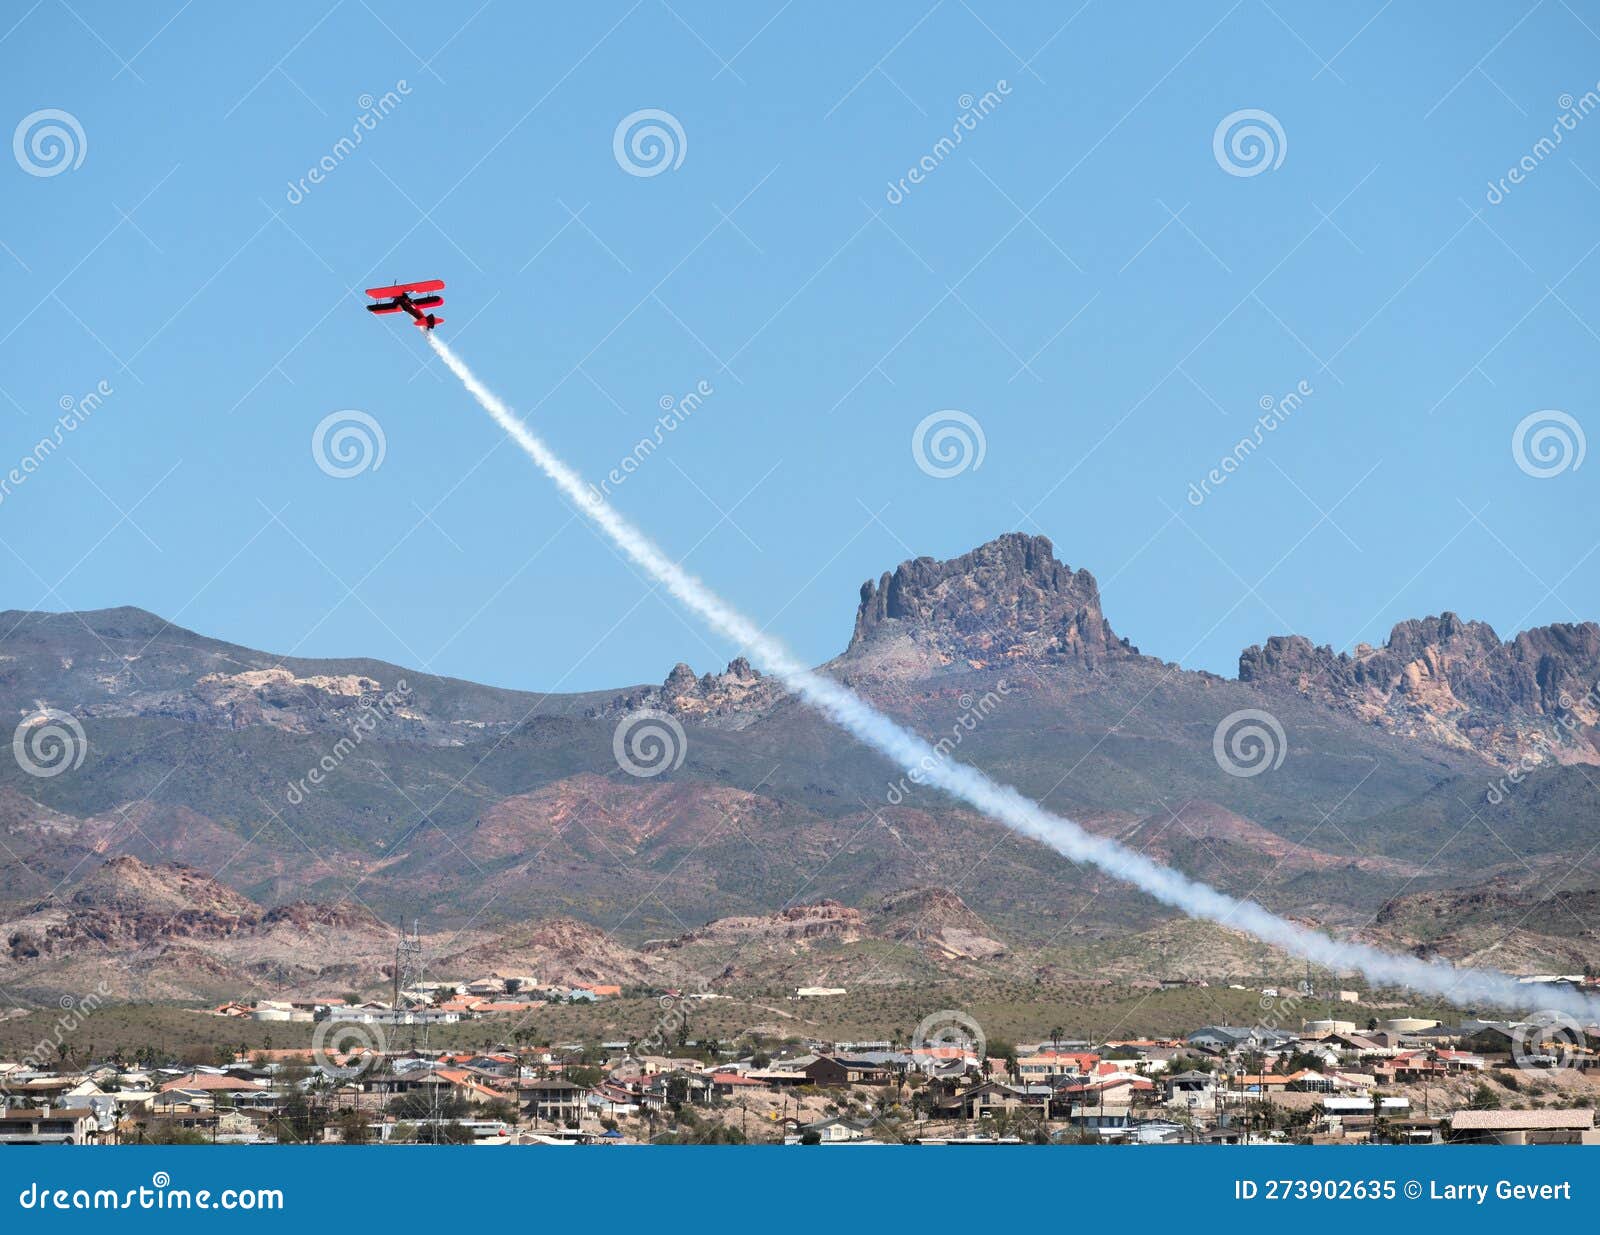 aerobatics on display at an air show over bullhead city, arizona